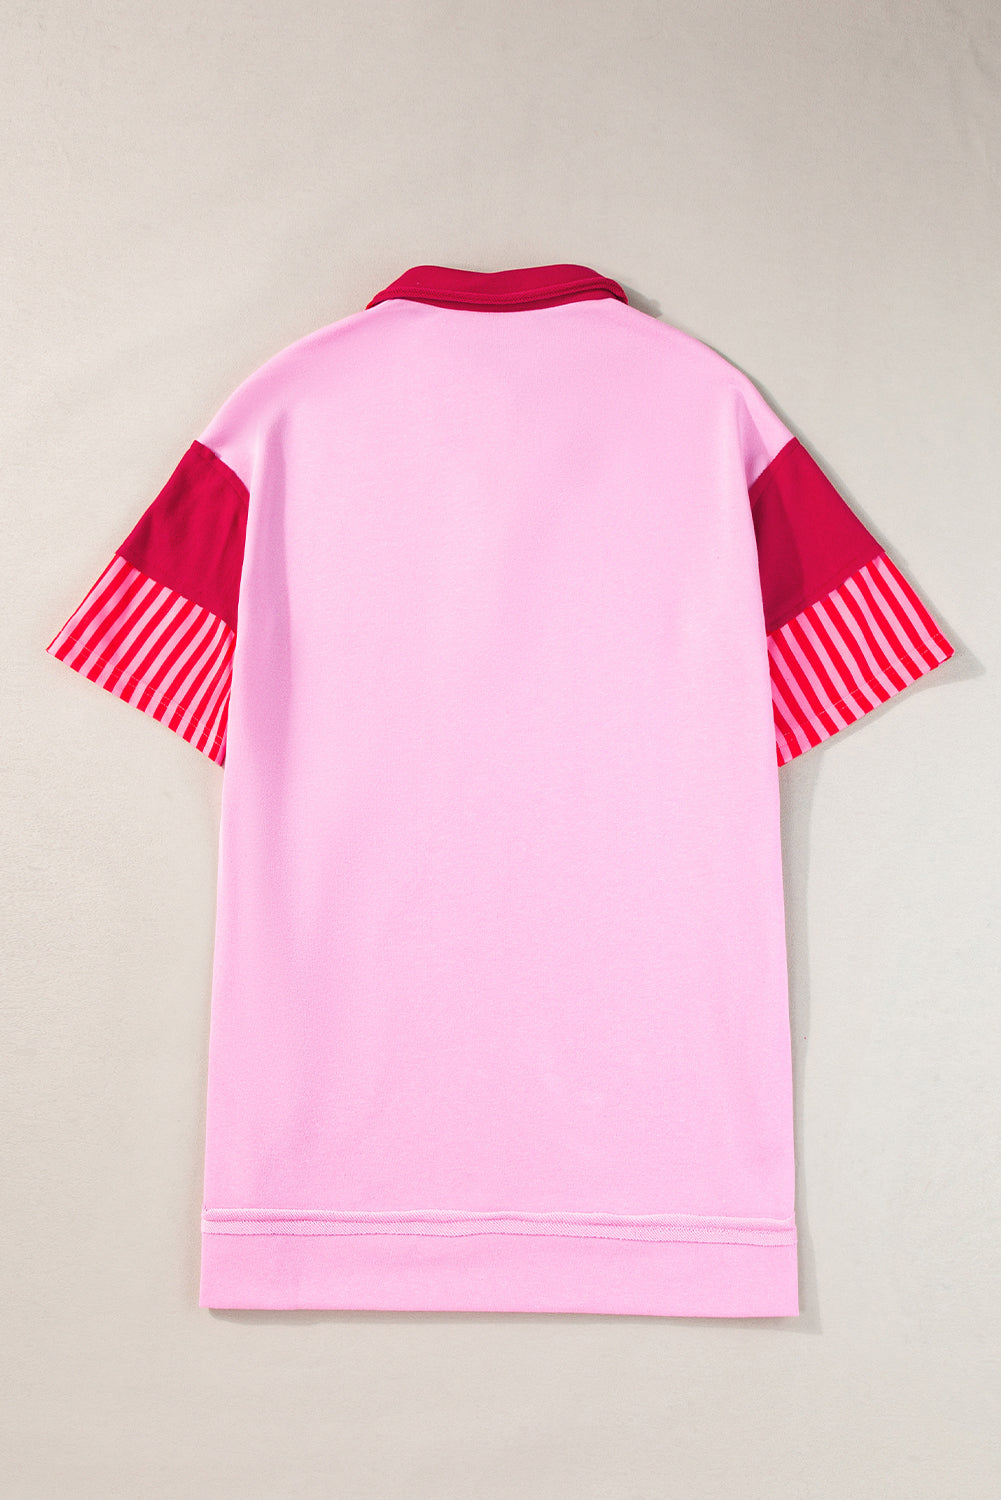 Pink Stripe Colorblock Patchwork Short Sleeve T Shirt Dress